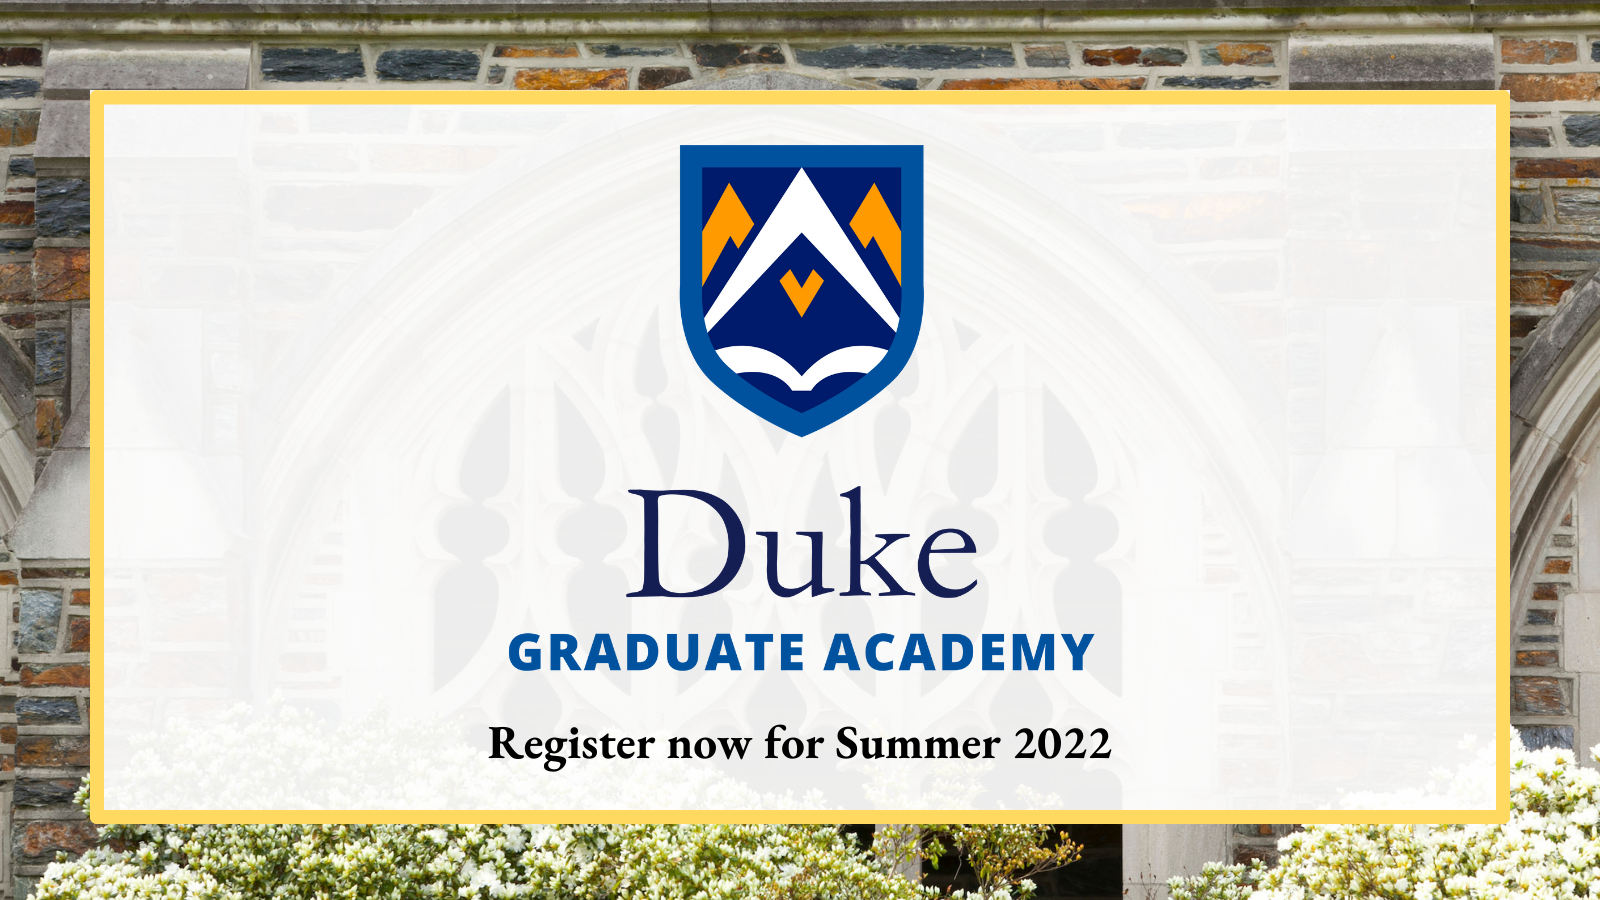 Register now for summer 2022 short courses in the Duke Graduate Academy.